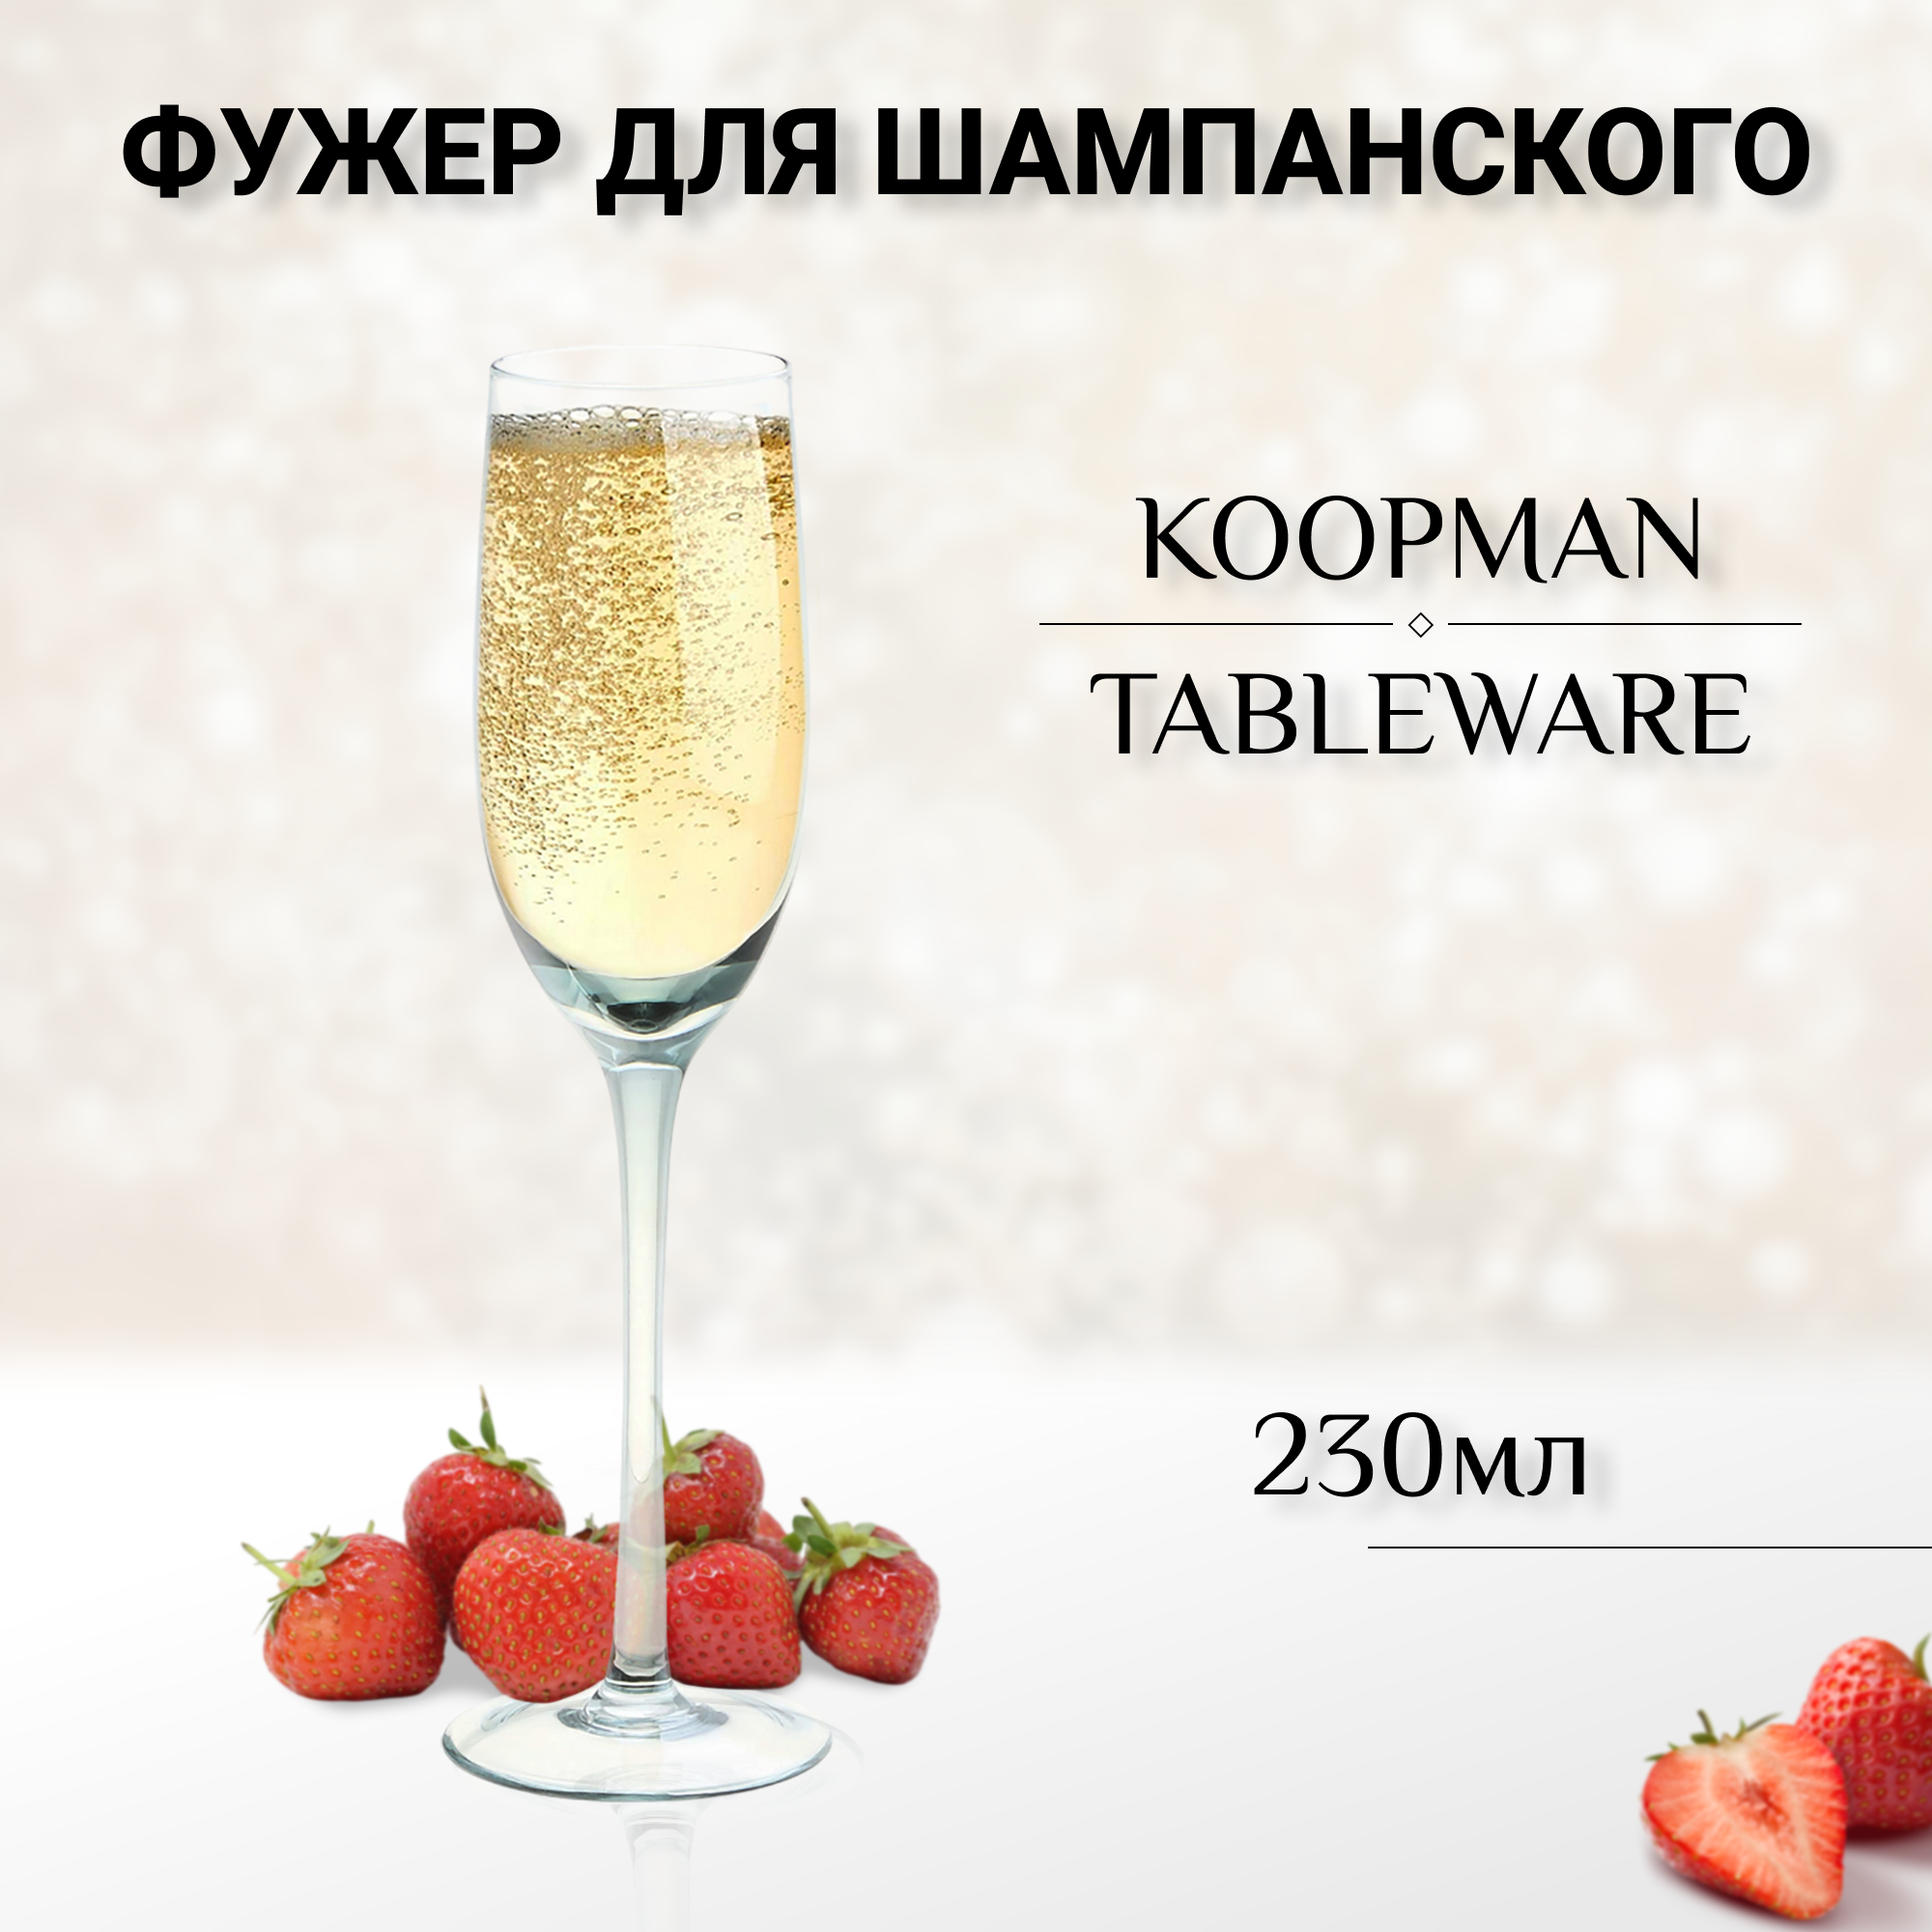 фото Фужер для шампанского koopman tableware 230 мл